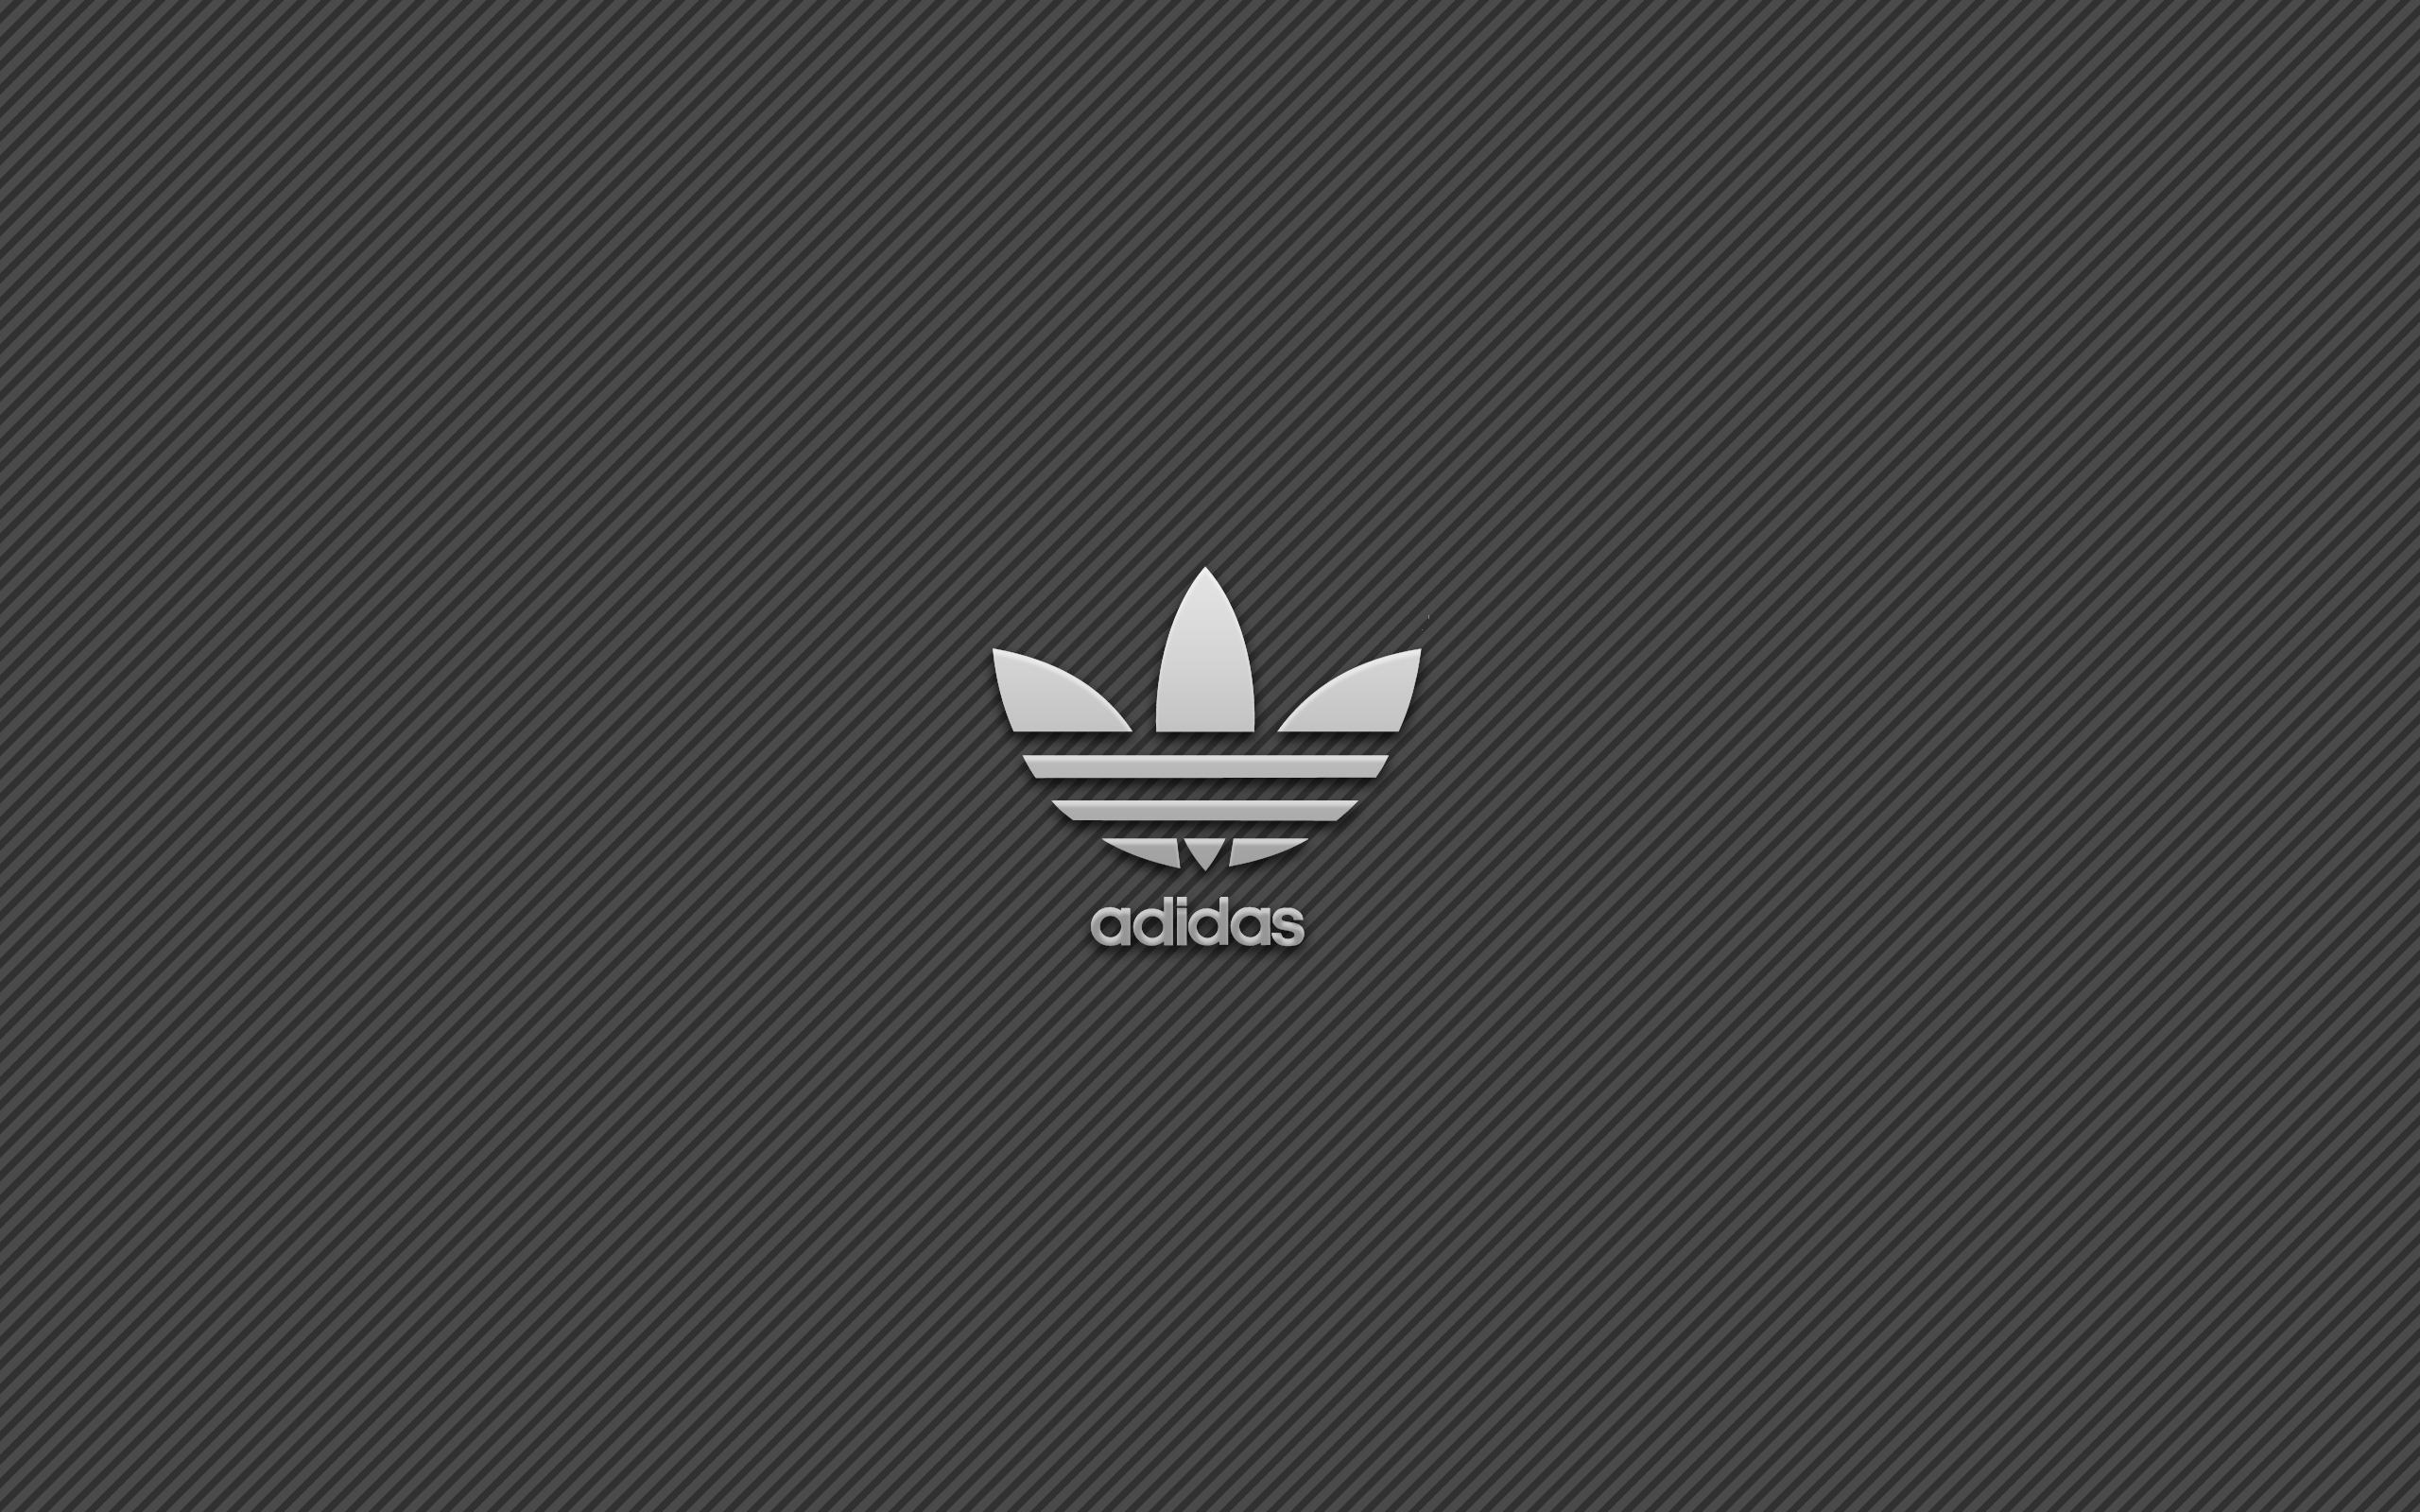 Adidas simple logo background wallpaper background